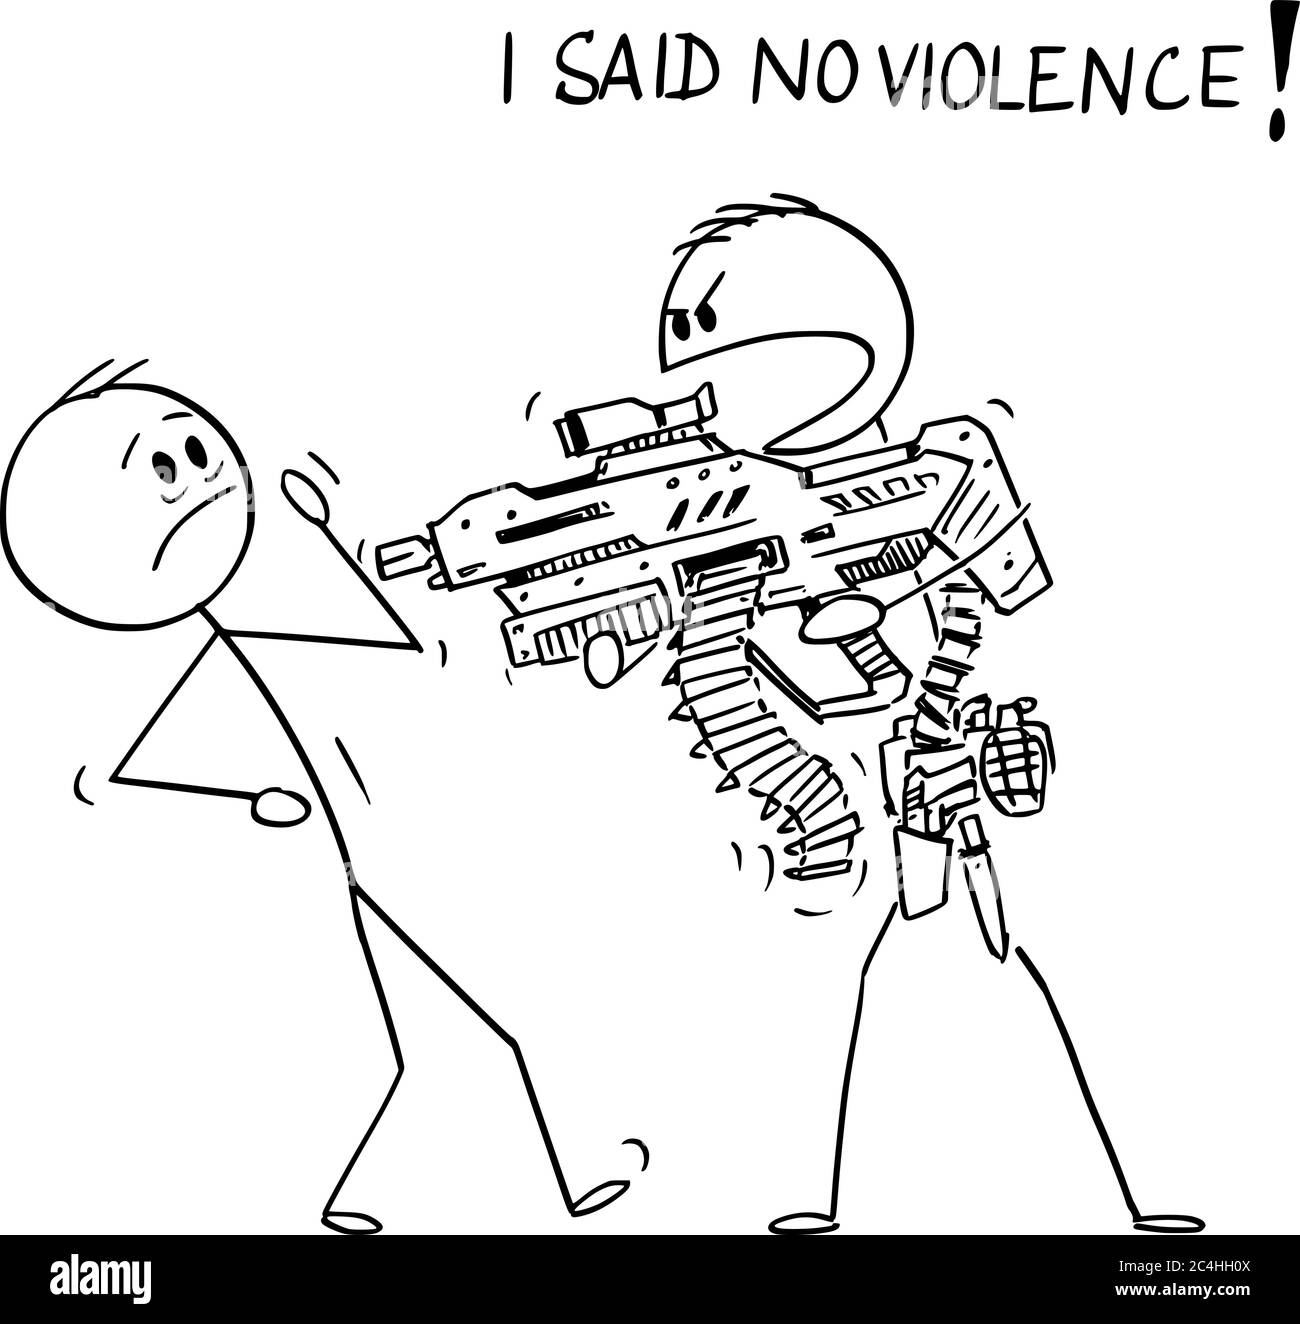 artists meme, Stick Figure Violence